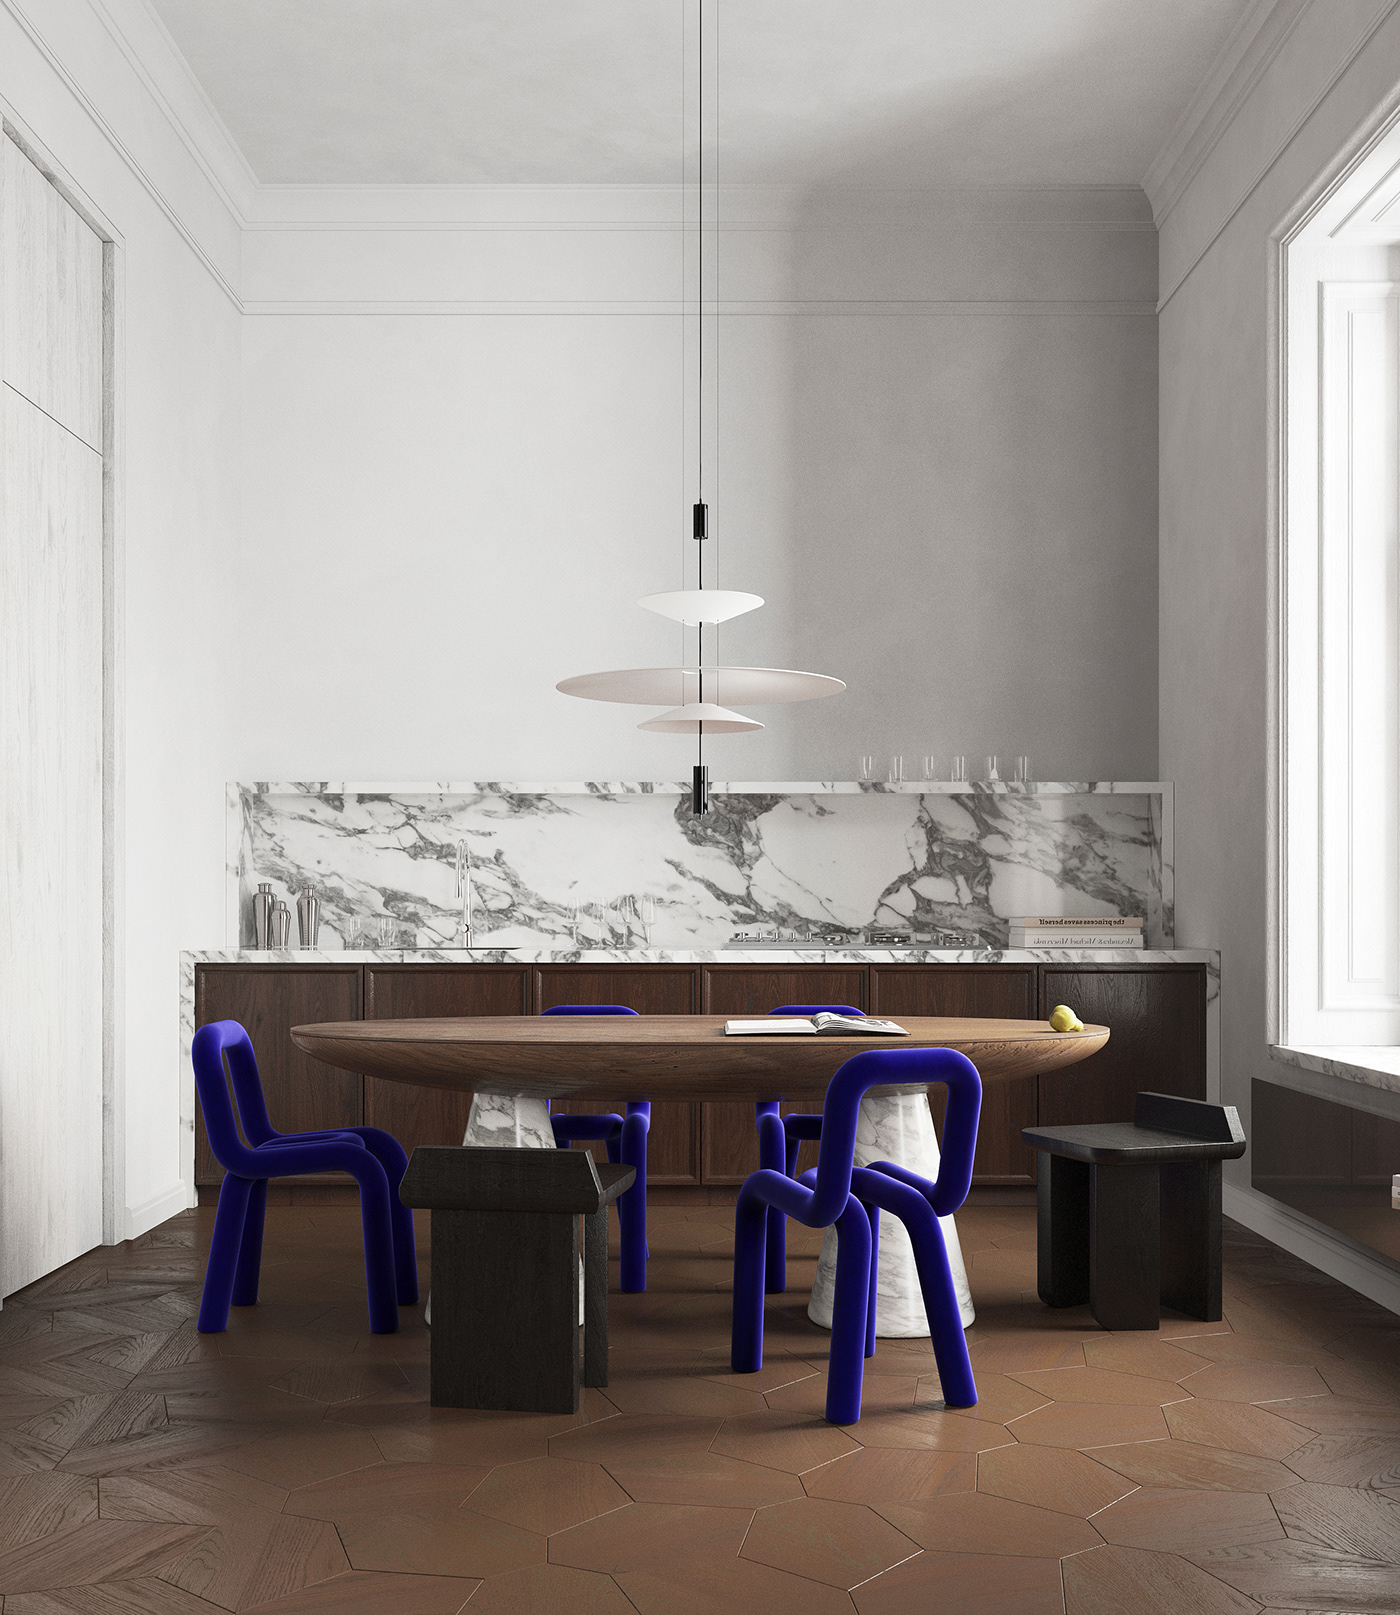 interiordesign Interior architecture Render 3ds max CGI corona visualization living room kitchen